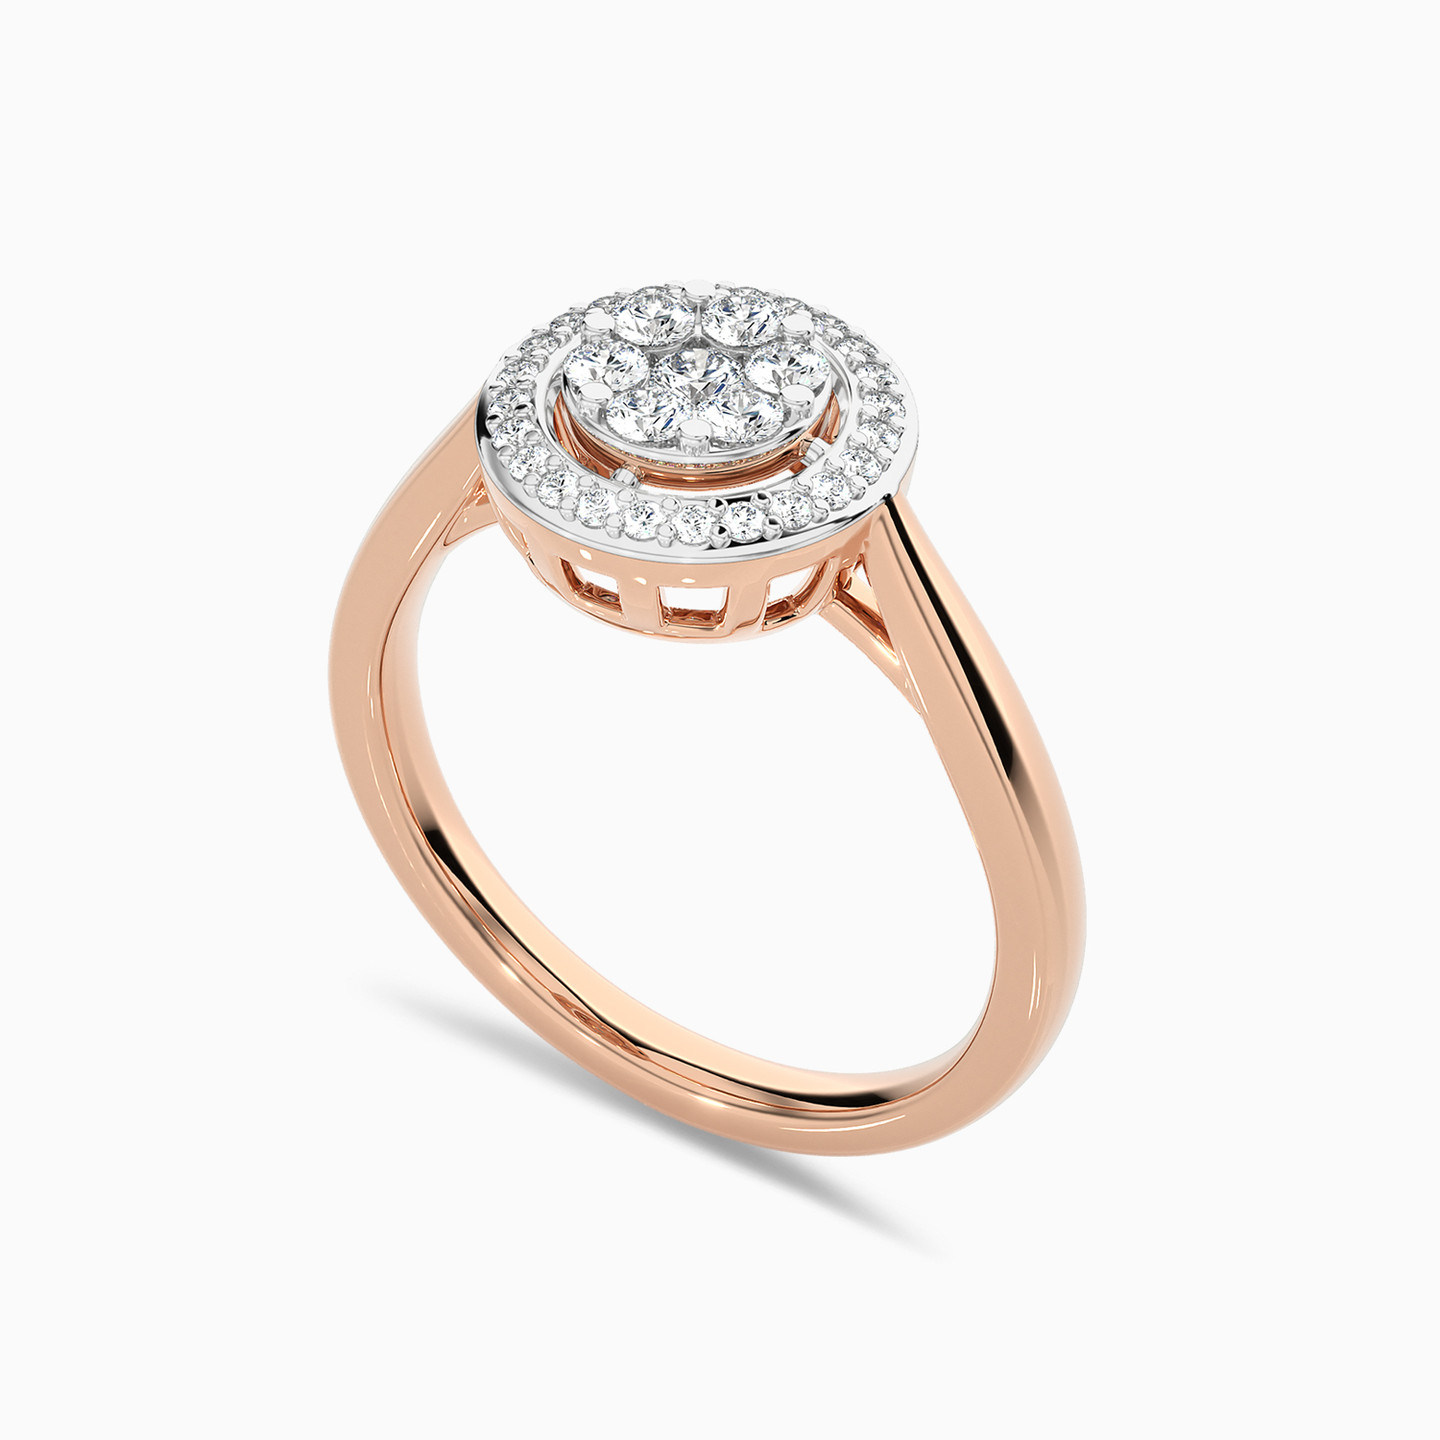 Round Shaped Diamond Statement Ring in 18K Gold - 2